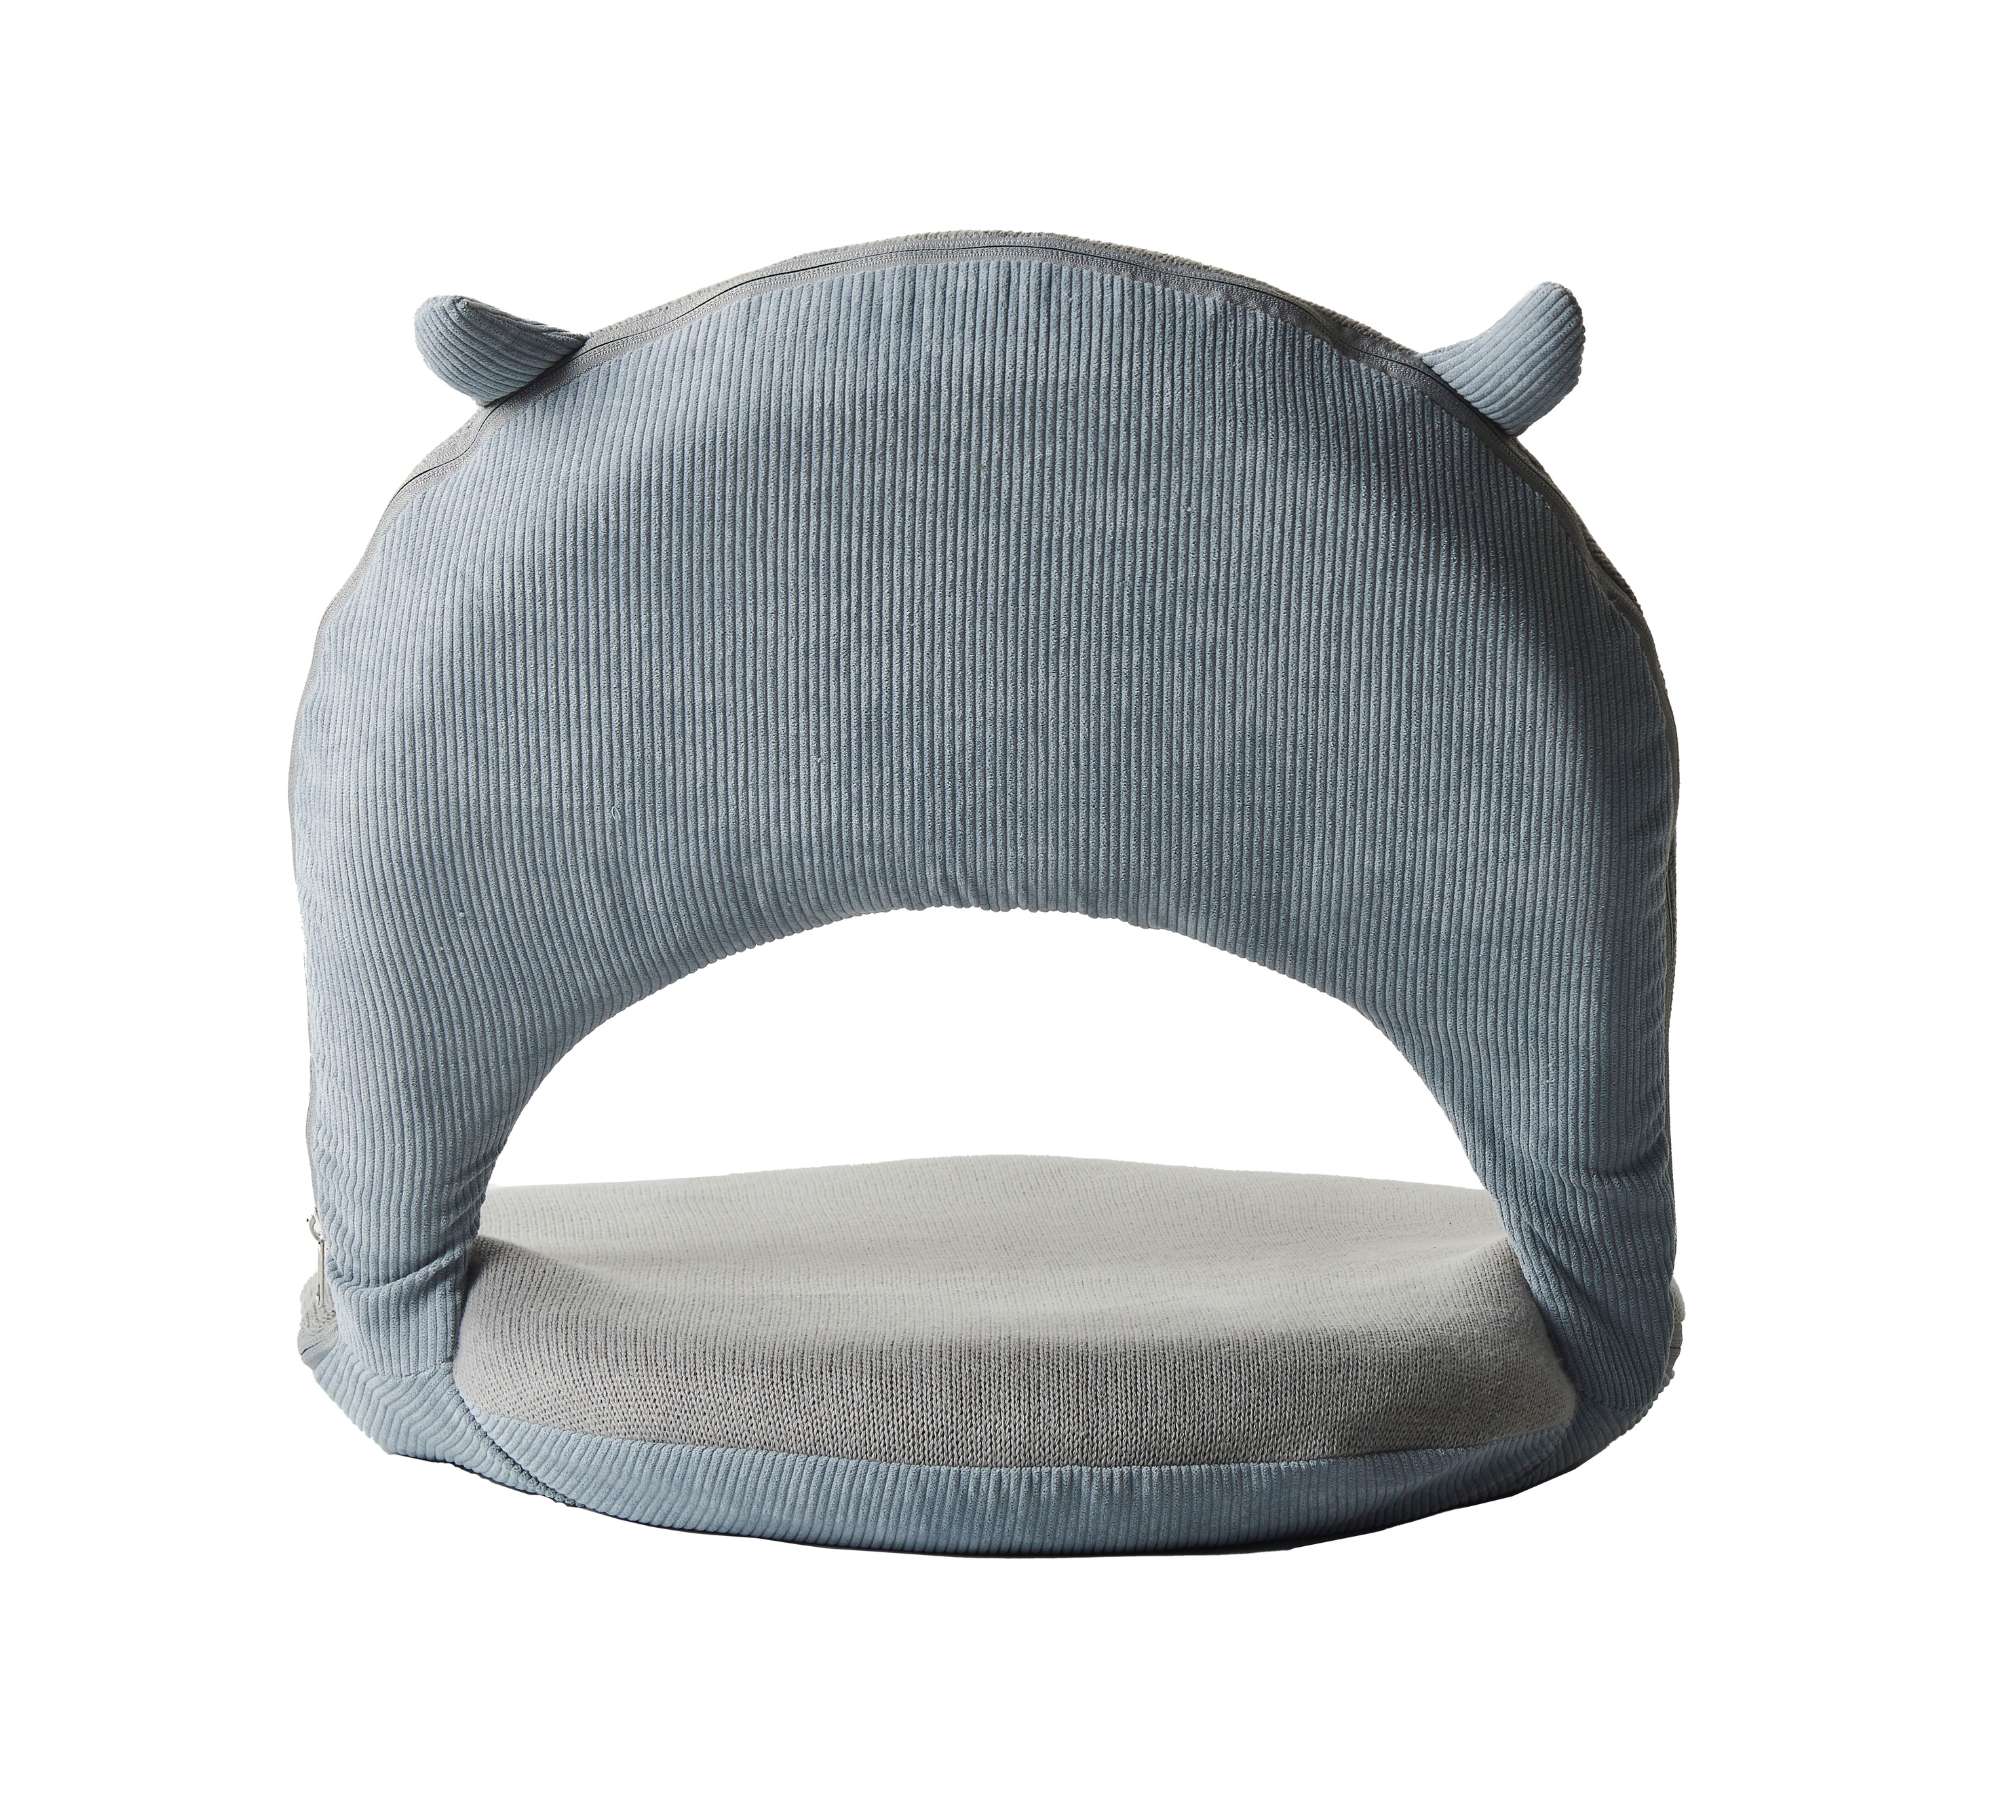 Maus Kindersitz Baumwolle Metall Grau